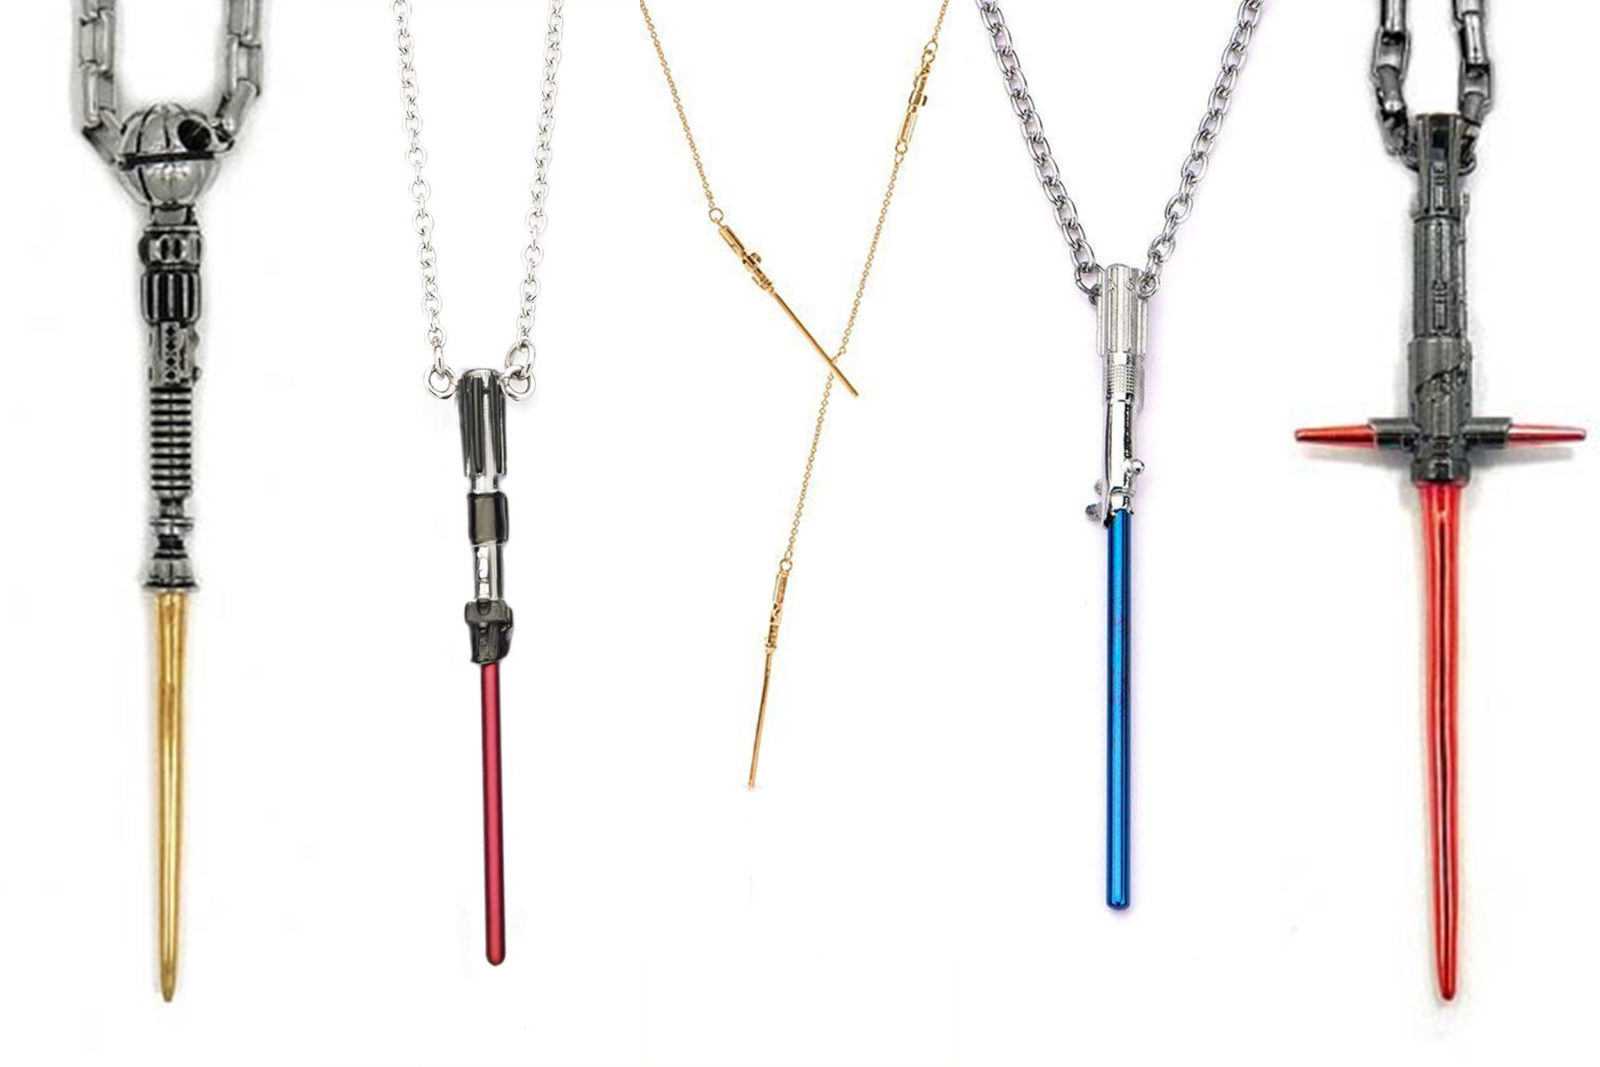 Leia's List - Star Wars Lightsaber Necklaces